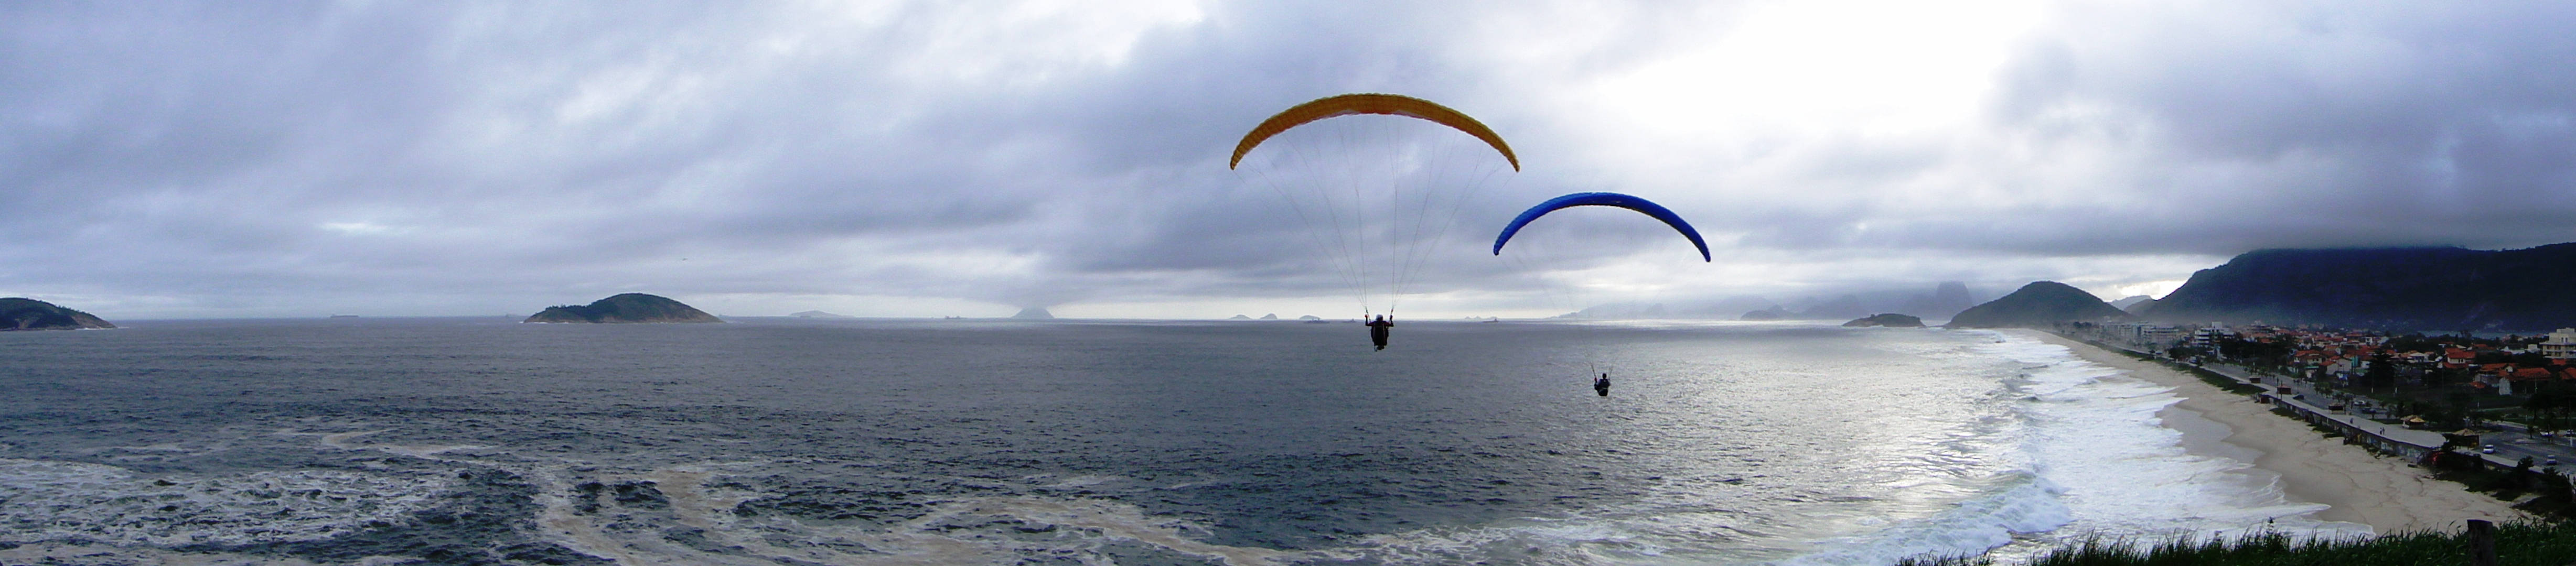 Paragliding Pilots Panoramic Shot Wallpaper